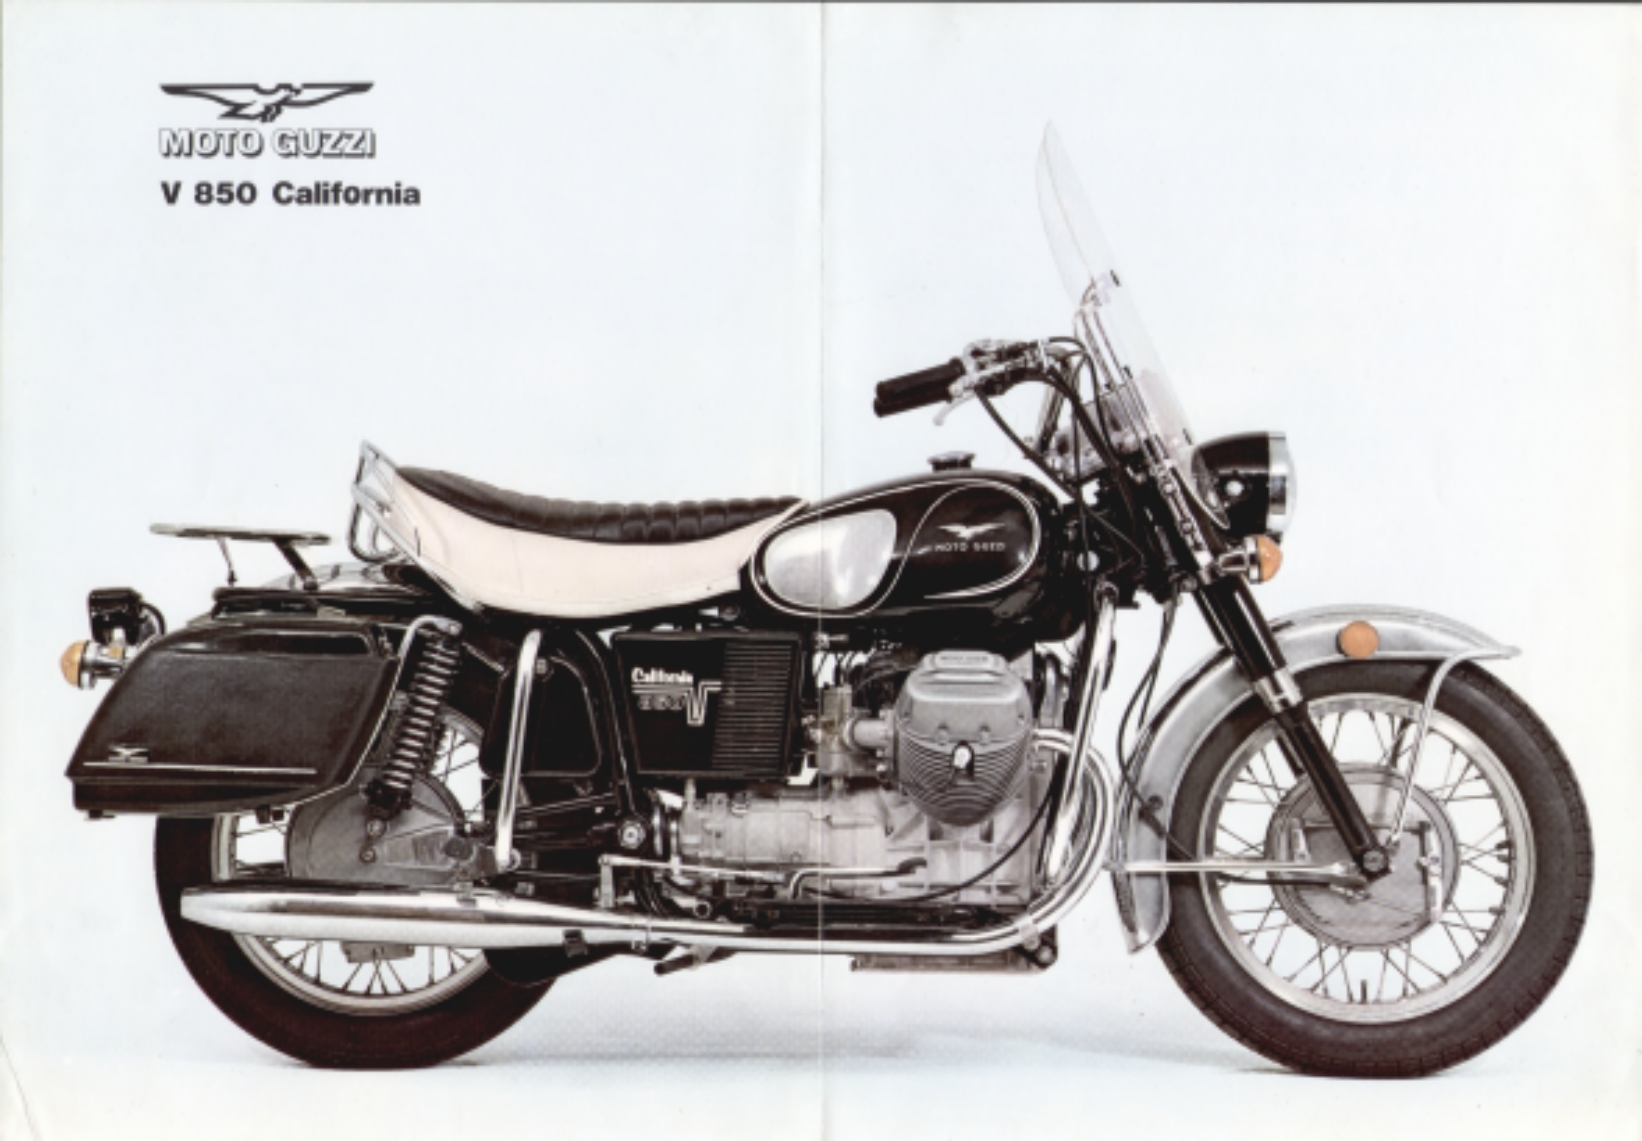 Moto Guzzi factory brochure: 850 California Police